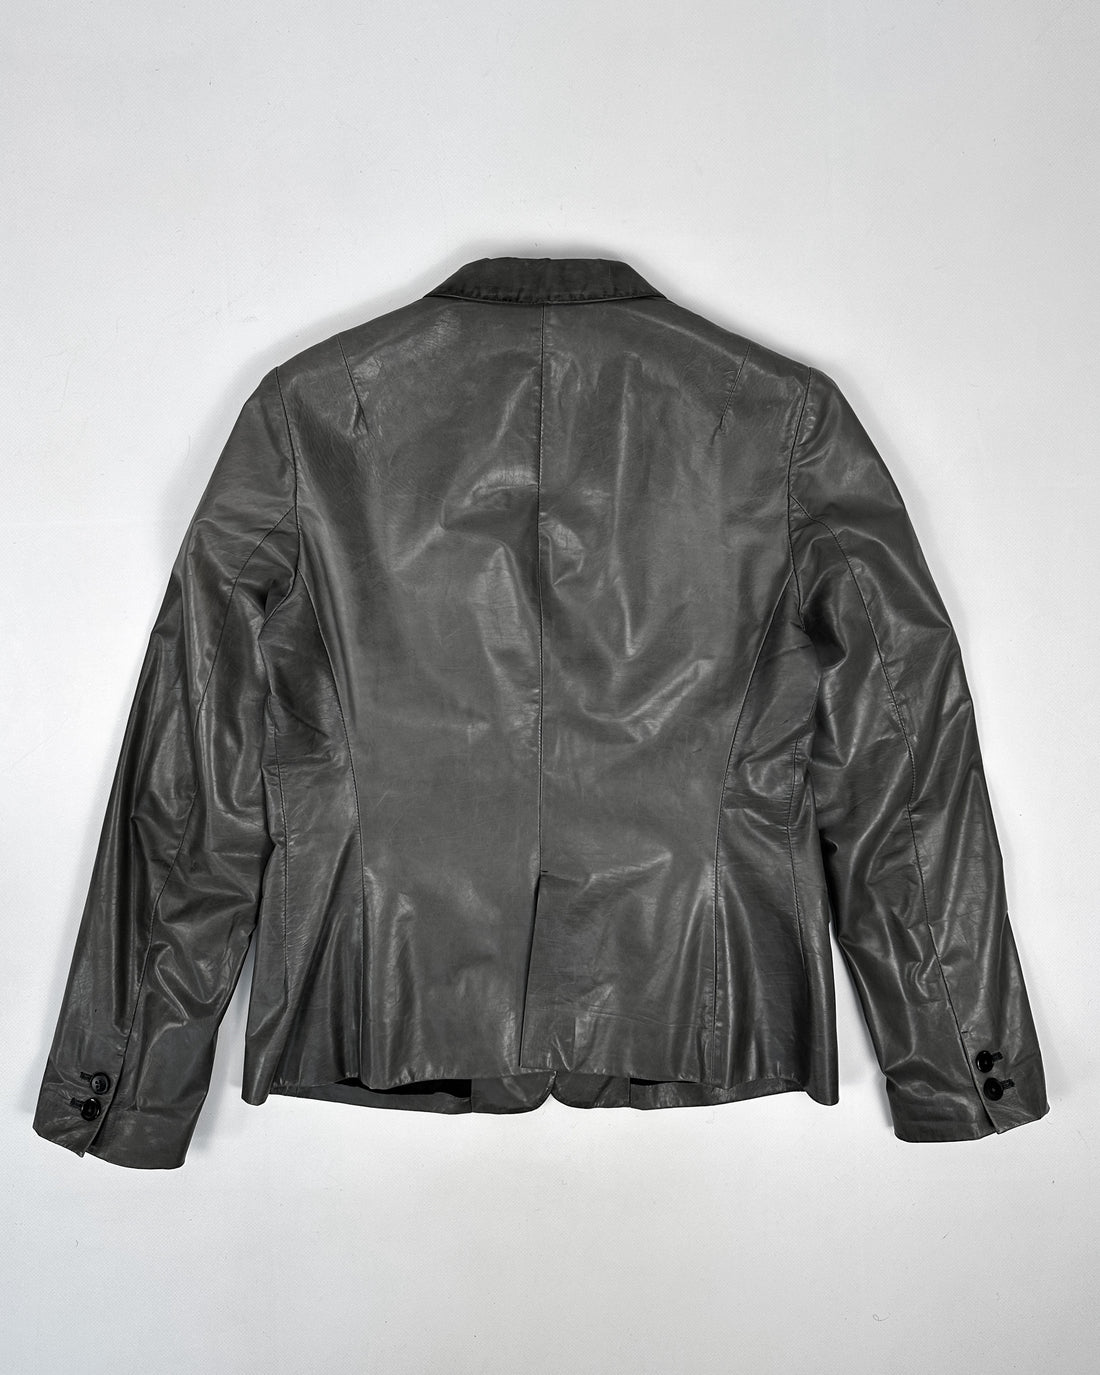 Jil Sander By Raf Simons Leather Jacket SS 2012